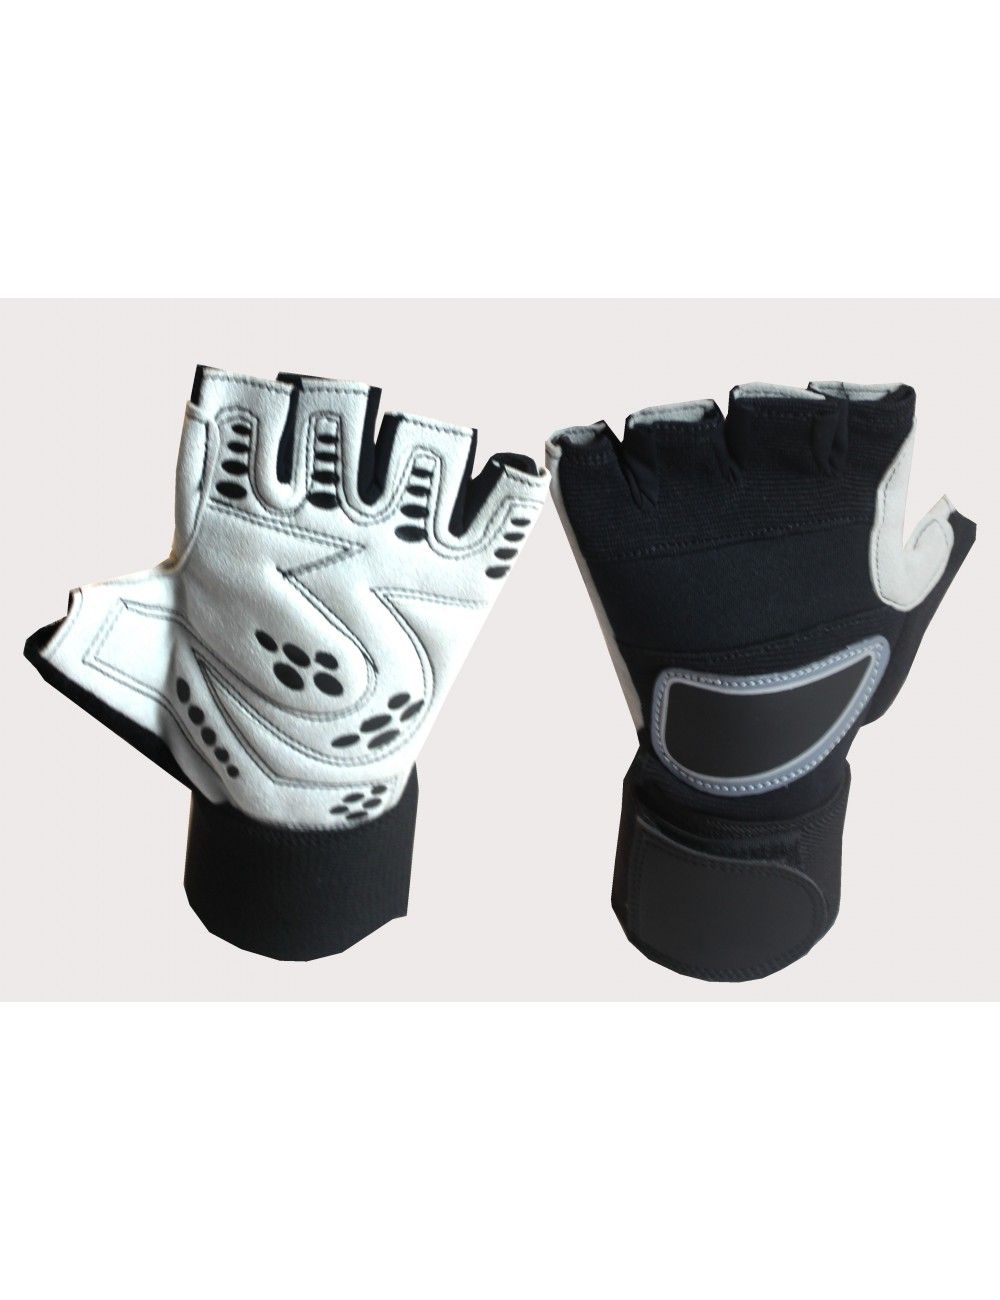 Profi Super Gripp Handschuhe mit Gelenksbandagen - 3